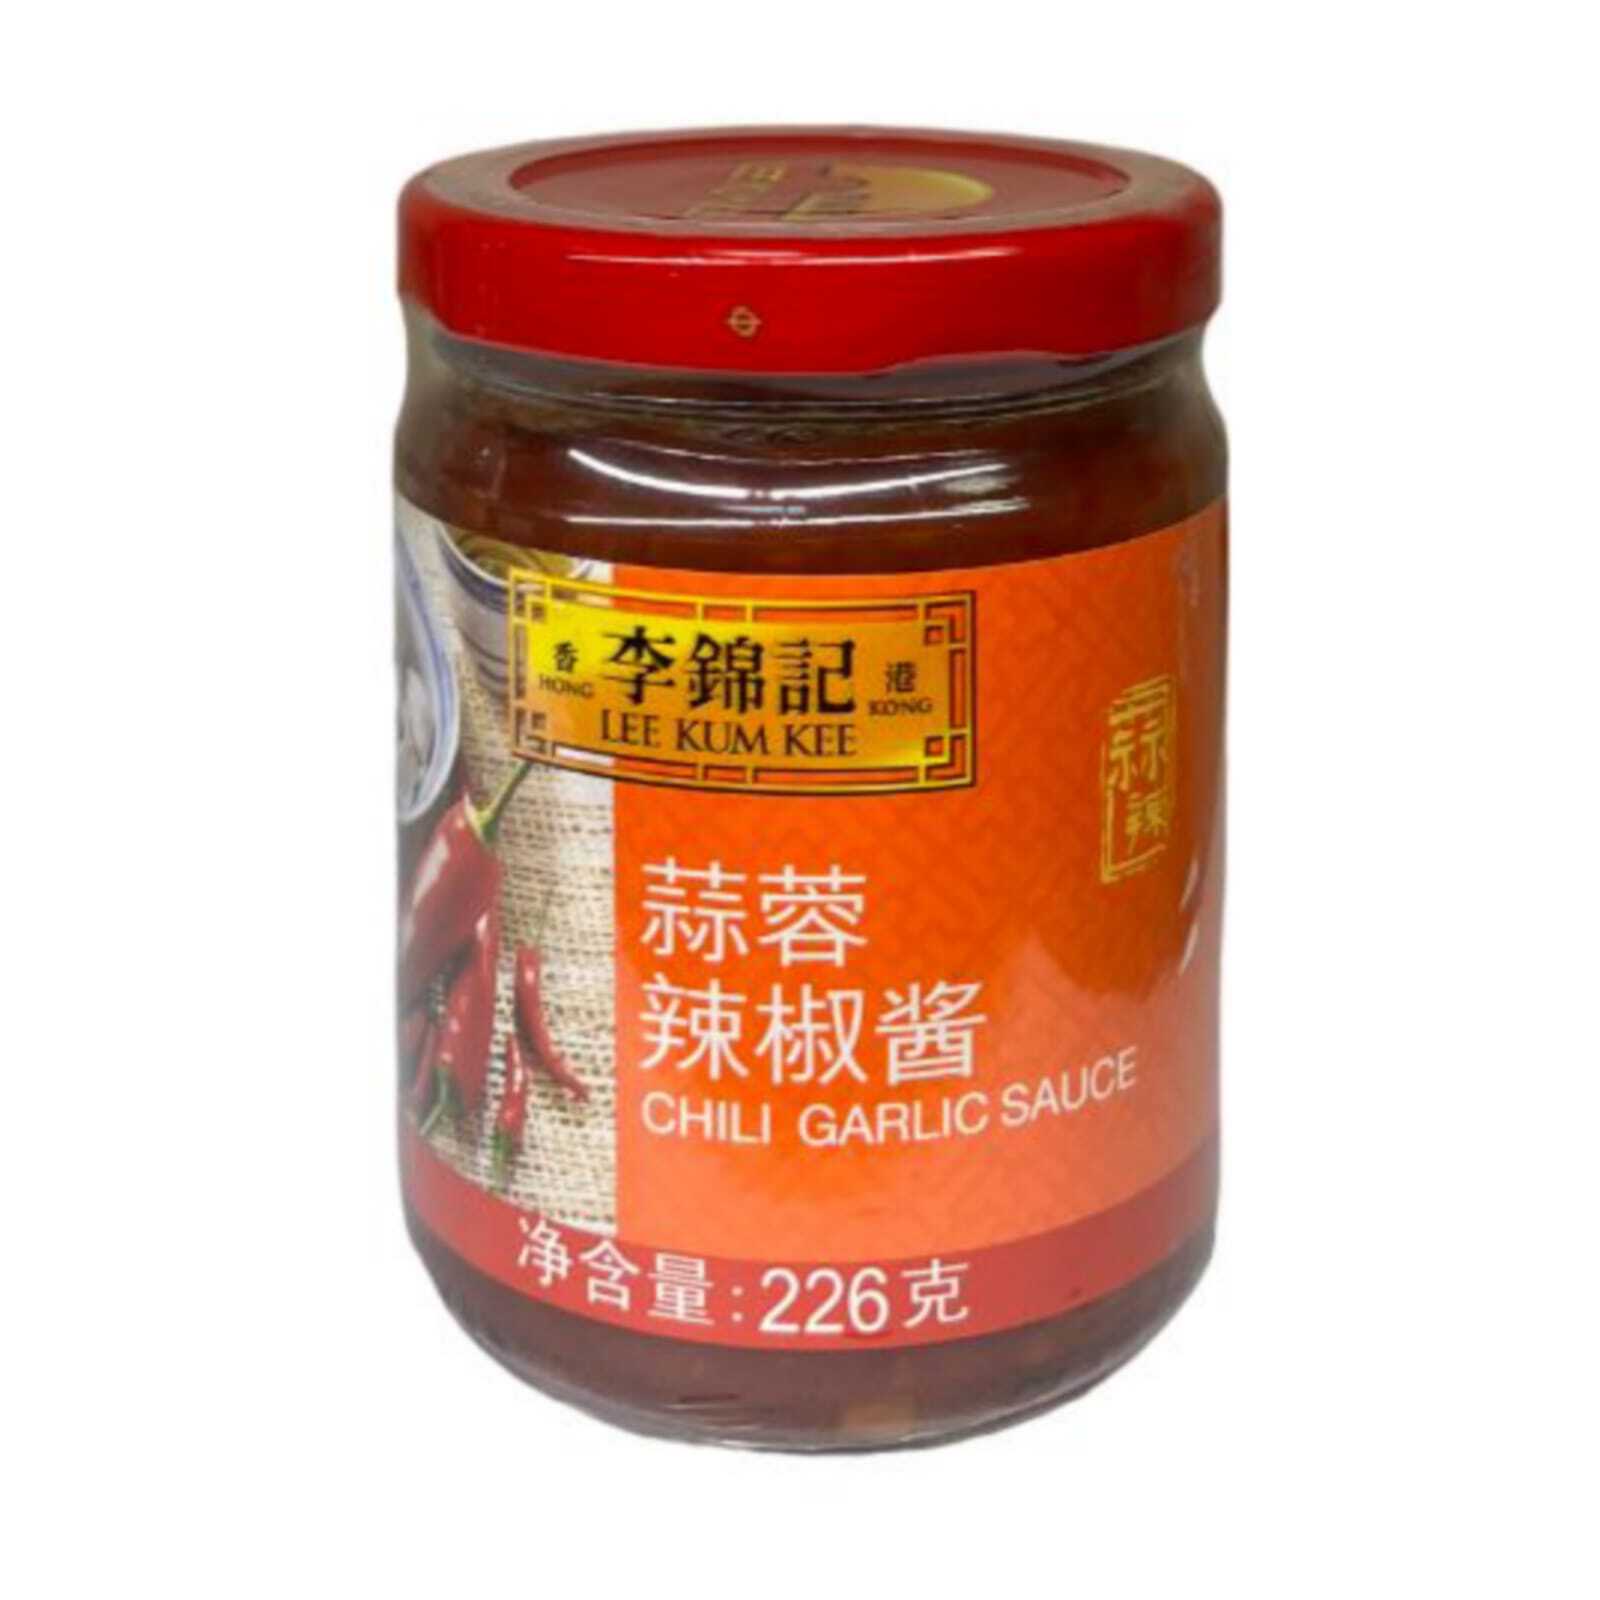 Соус Lee Kum Kee Chili garlic, 226 г